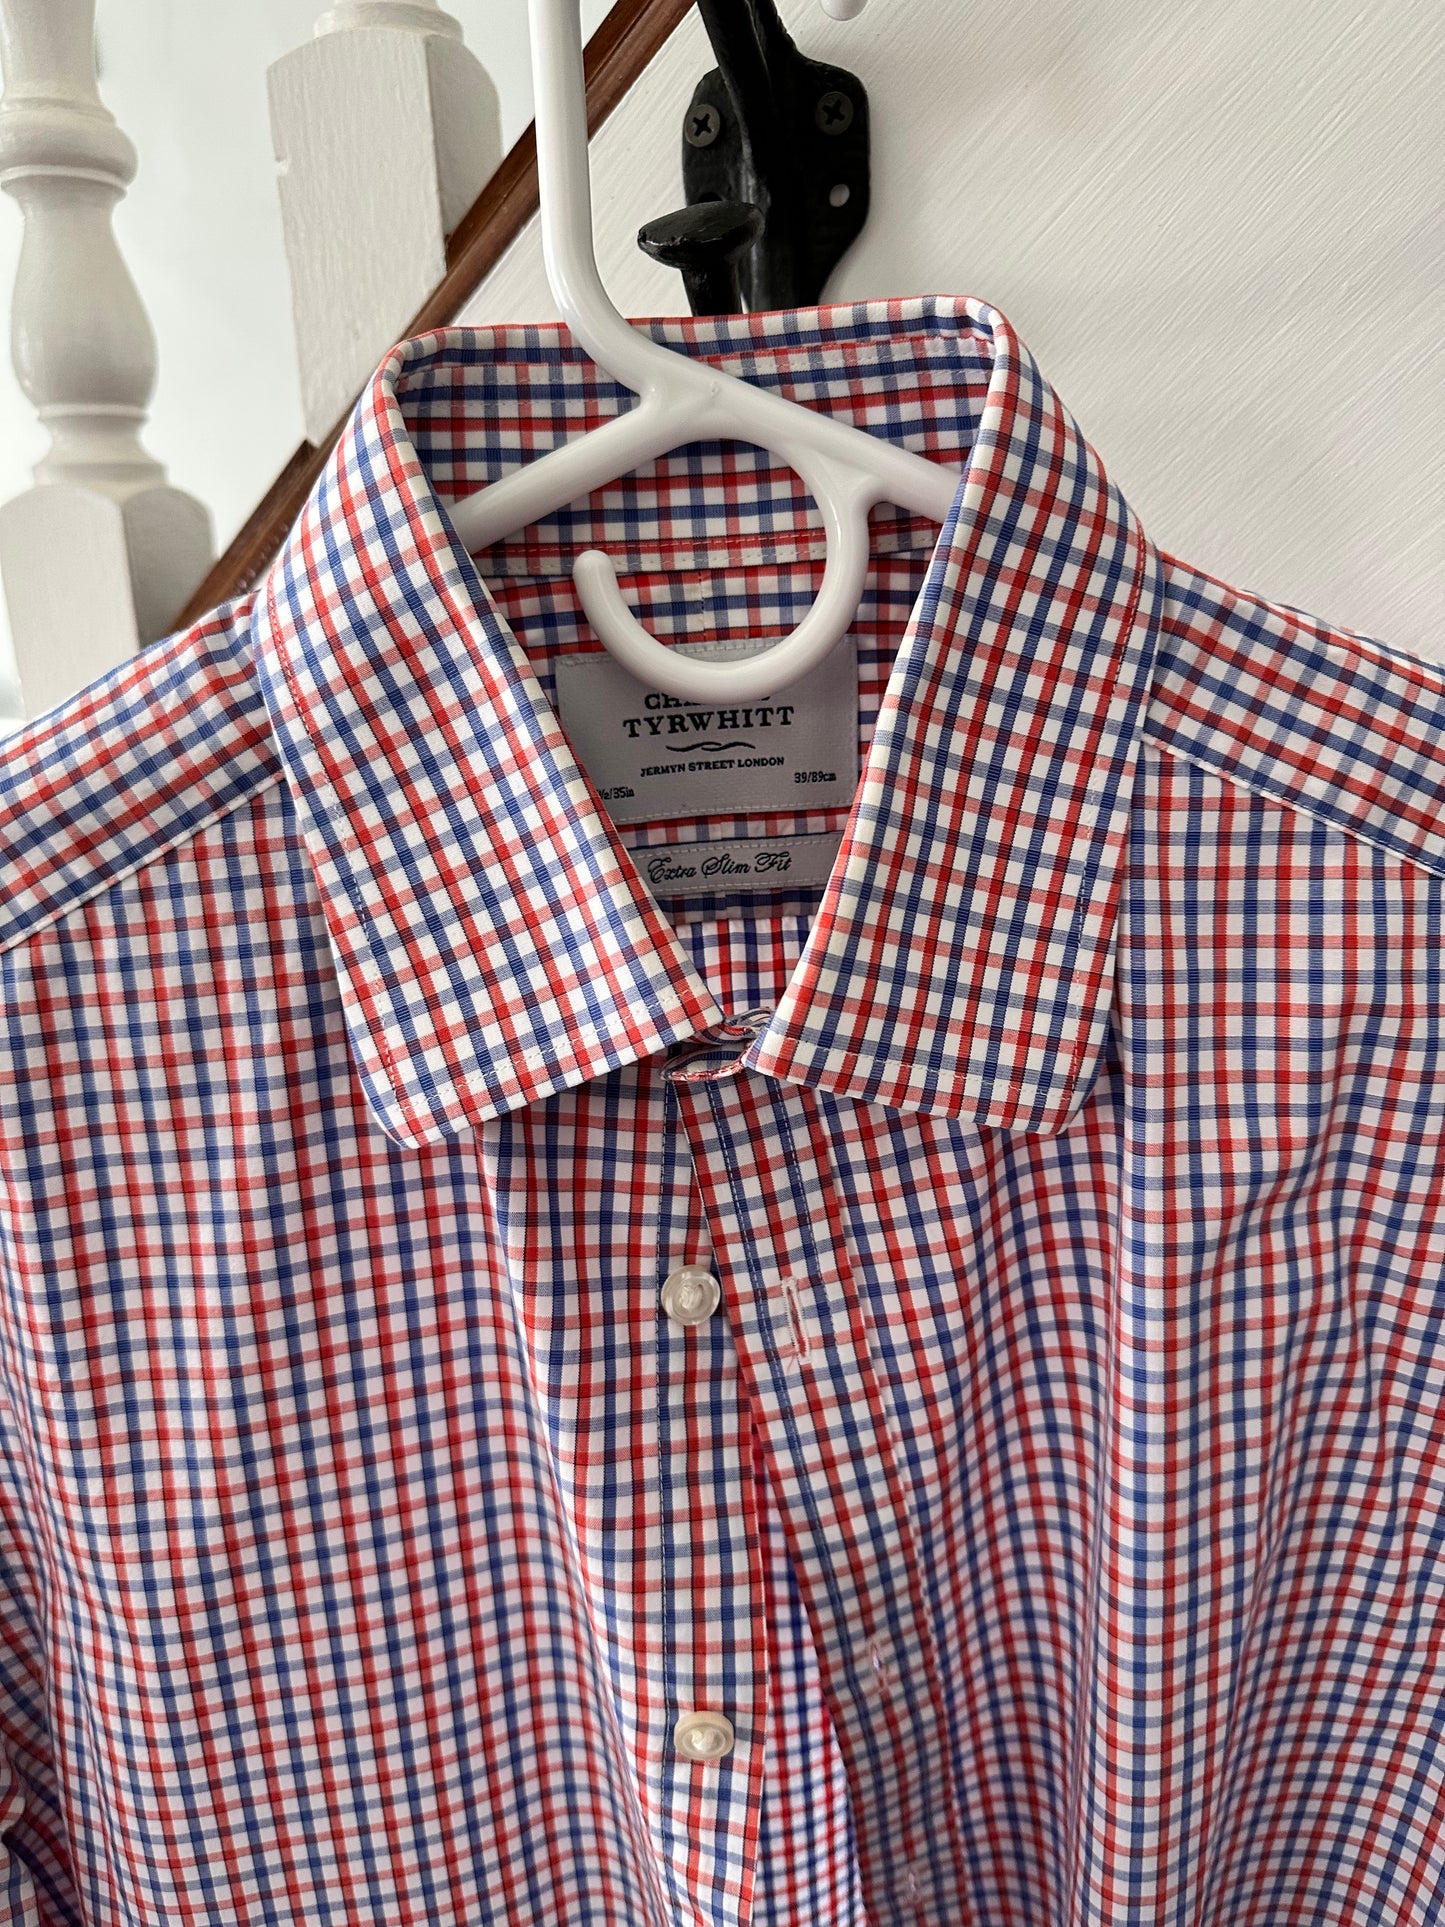 Charles Tyrwhitt Extra Slim Fit Dress Shirt, red/blue check, Collar: 15 1/2; Sleeve Length: 35in; EUC